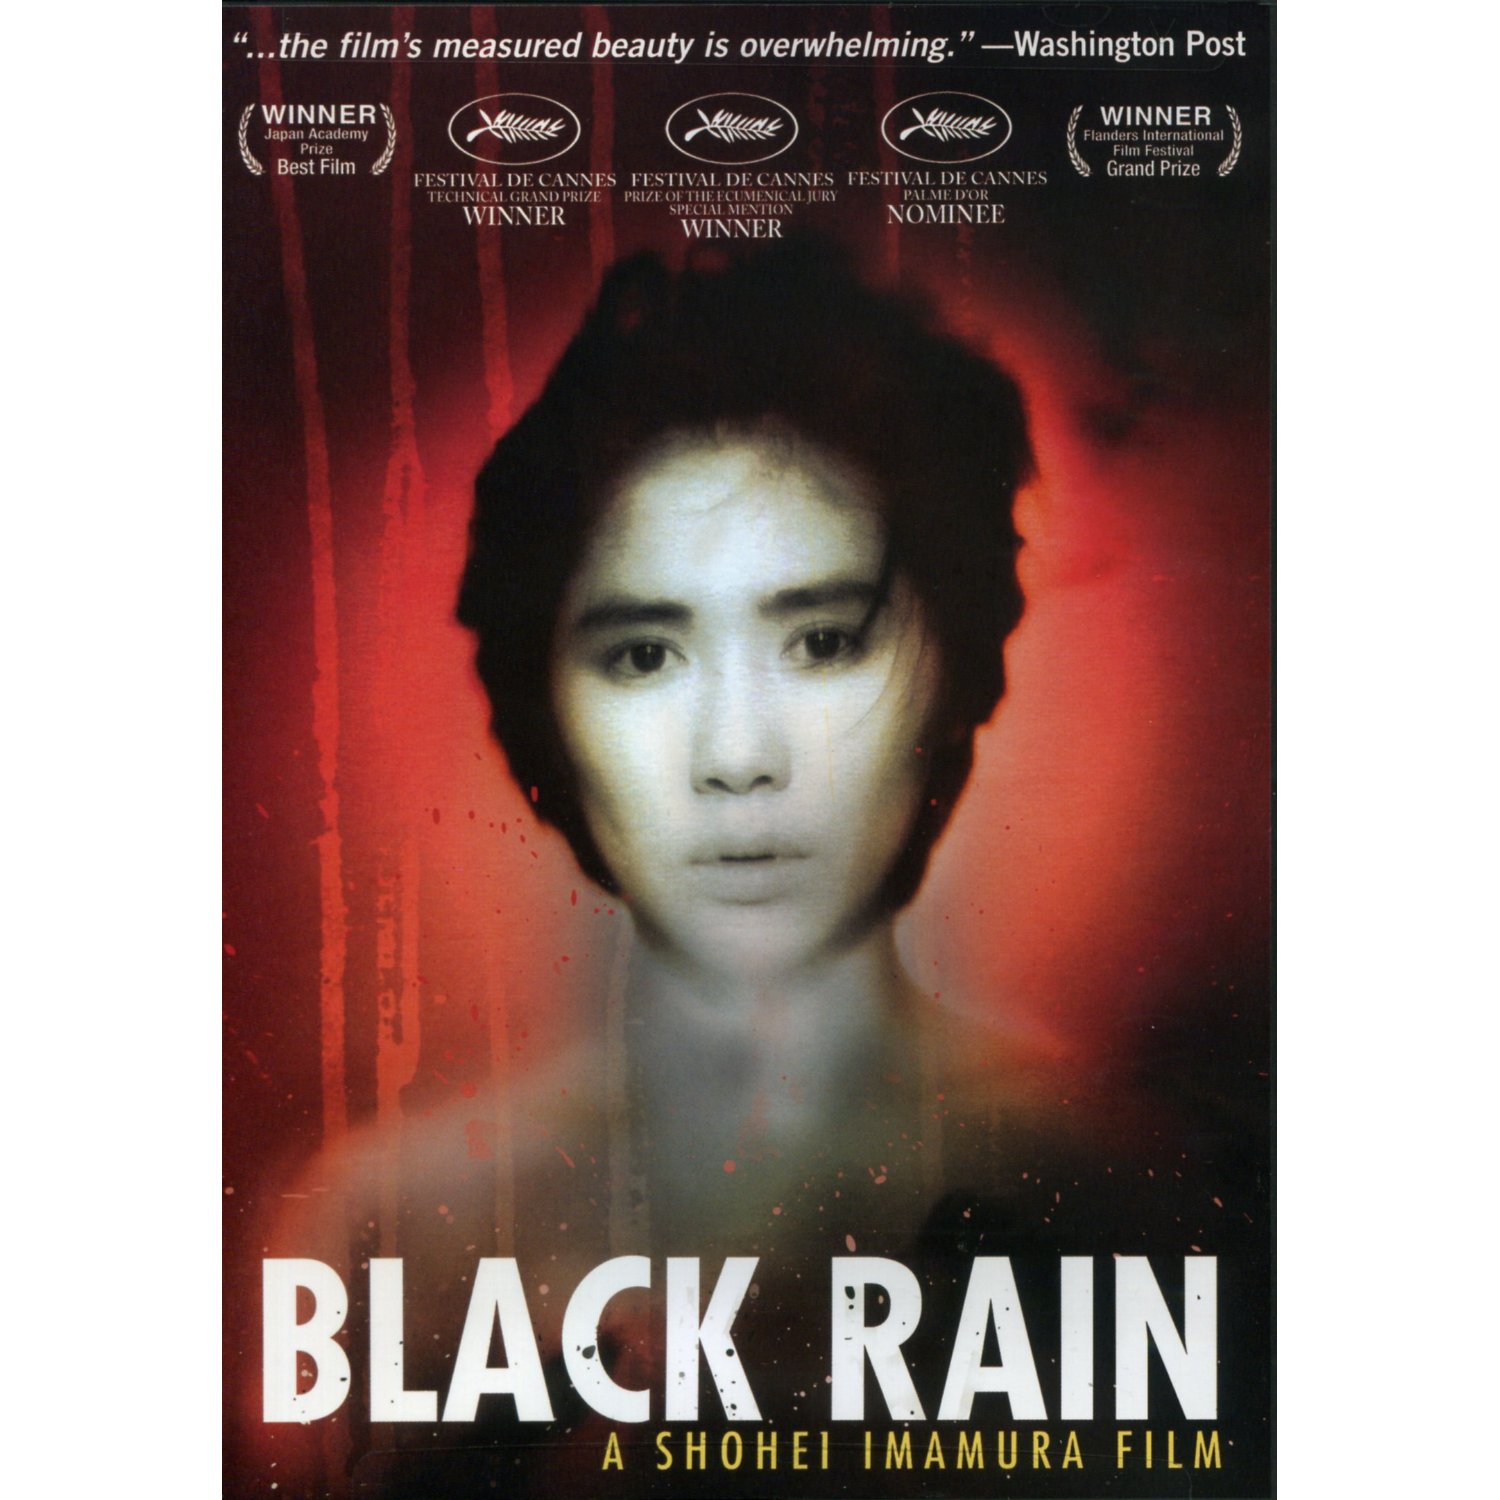 http://4.bp.blogspot.com/_OPbAxKeFvSg/TMGjx9c4BvI/AAAAAAAAAu0/GenOugy6AIY/s1600/dvd+Black+Rain.jpg